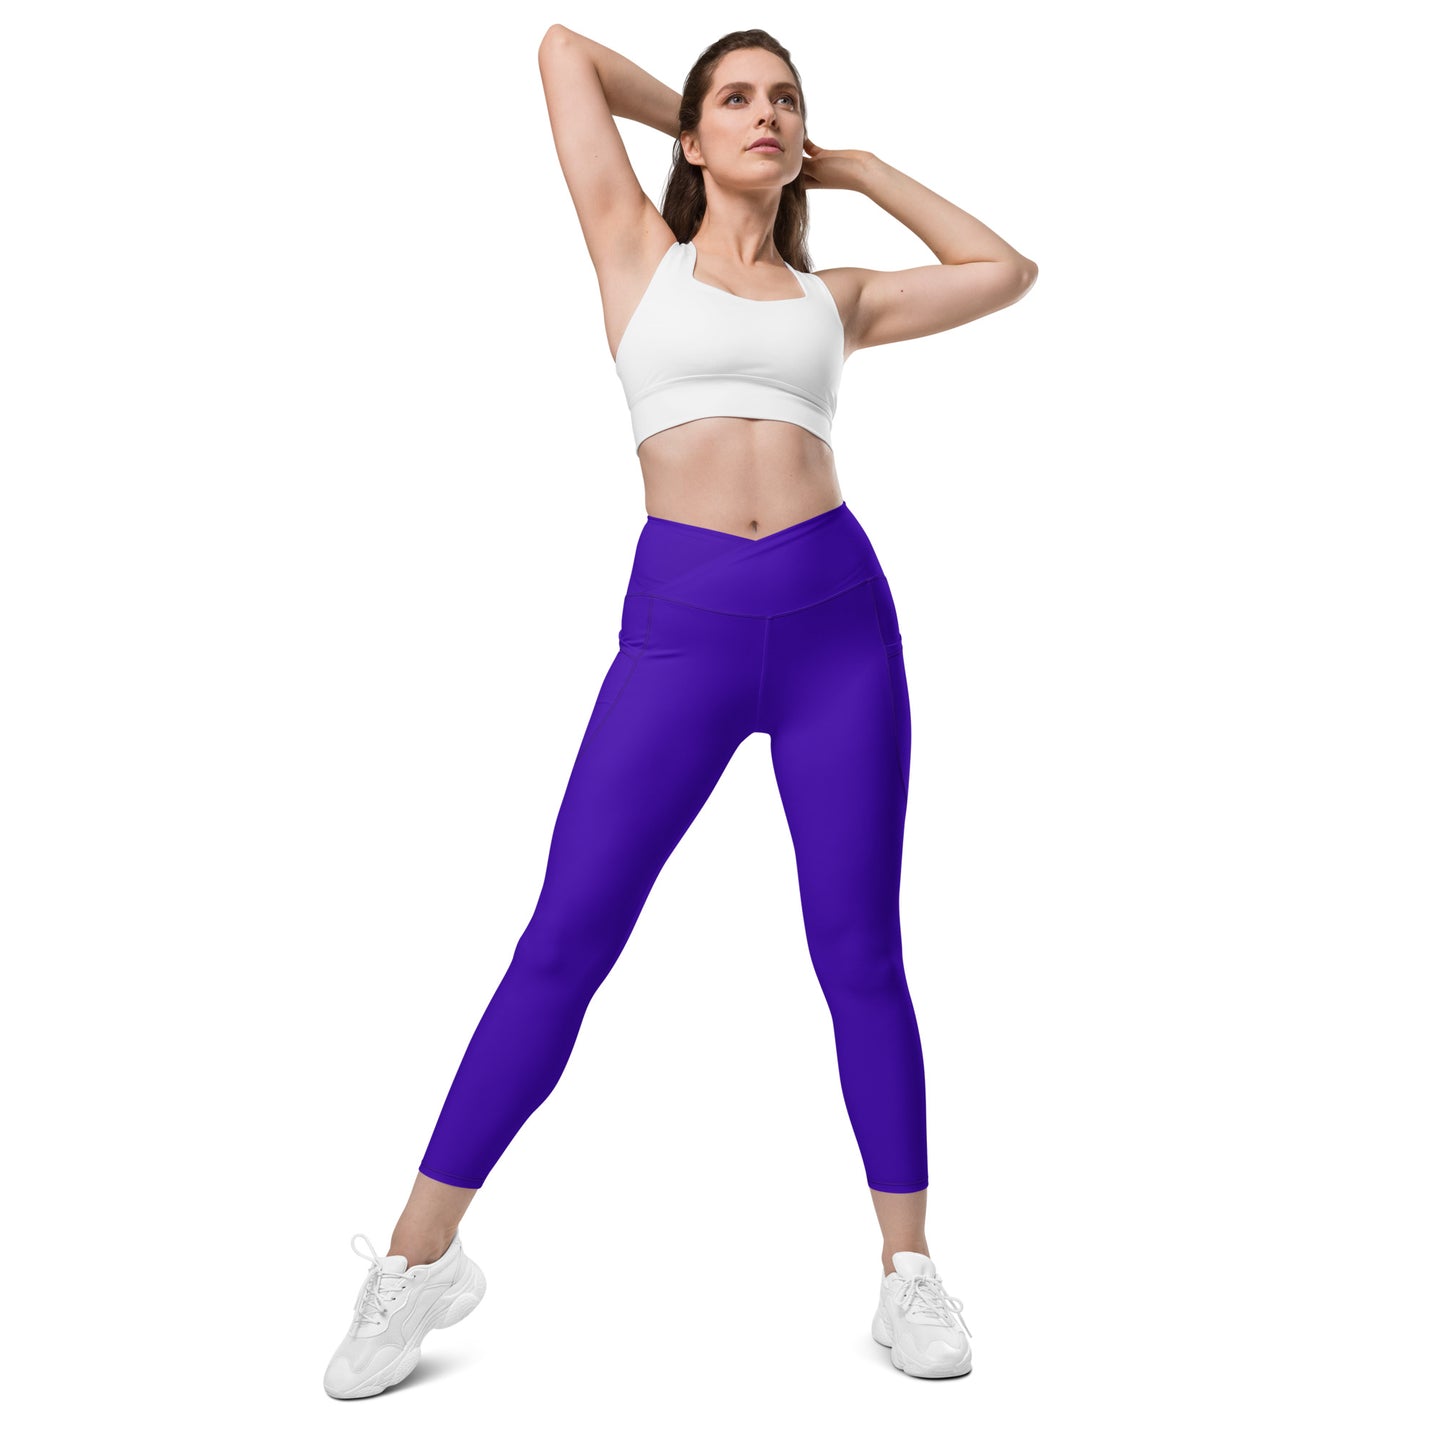 purple leggings with pockets